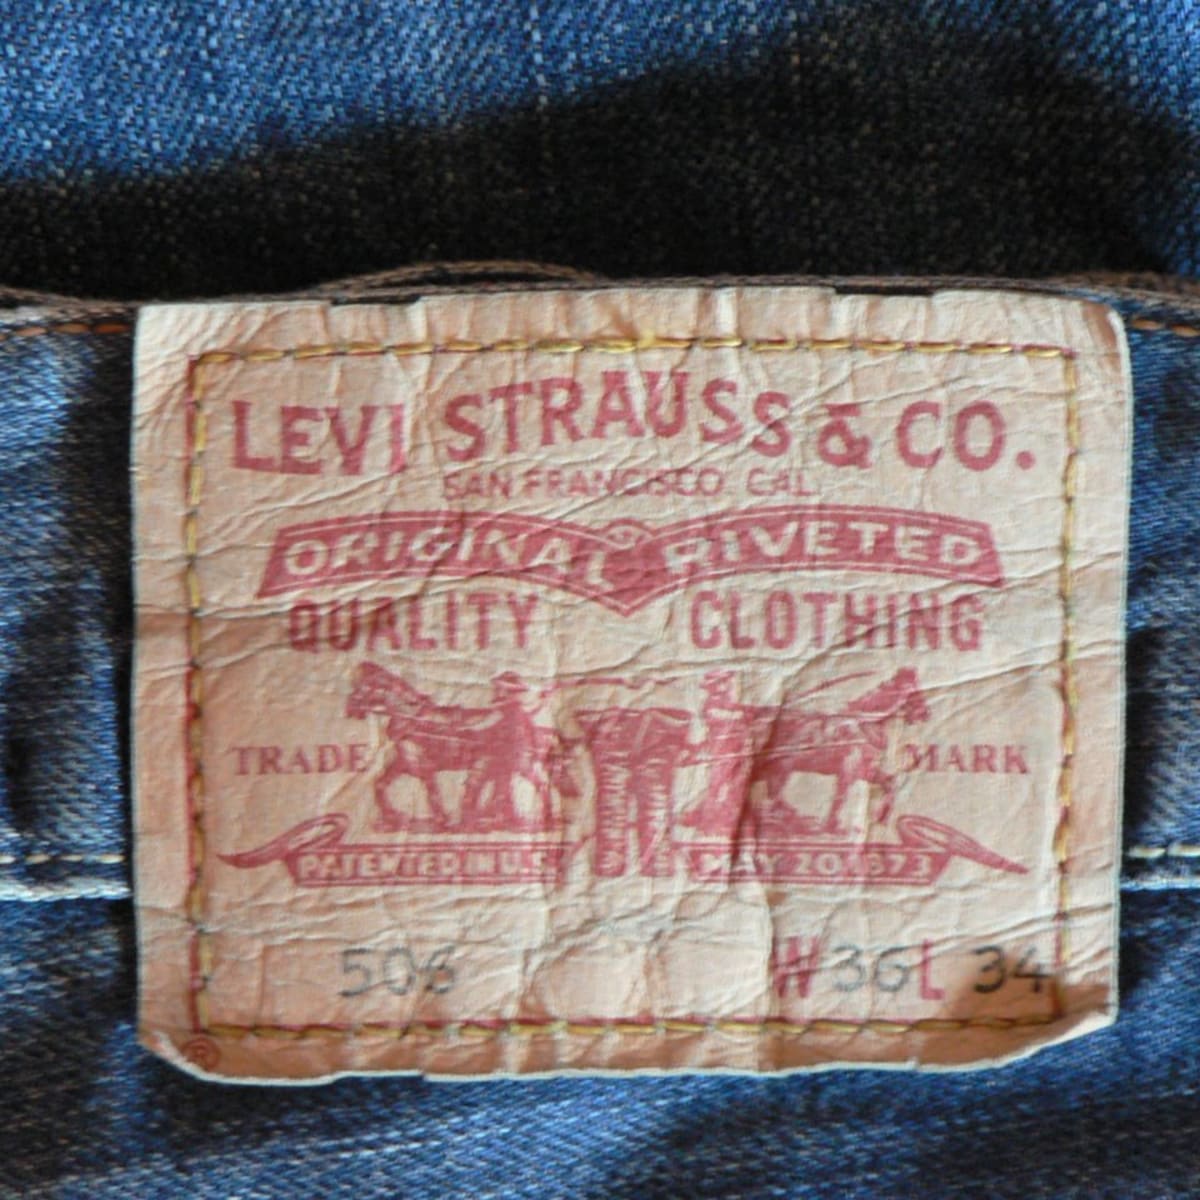 Your LEVI'S Jeans Return Warranty 